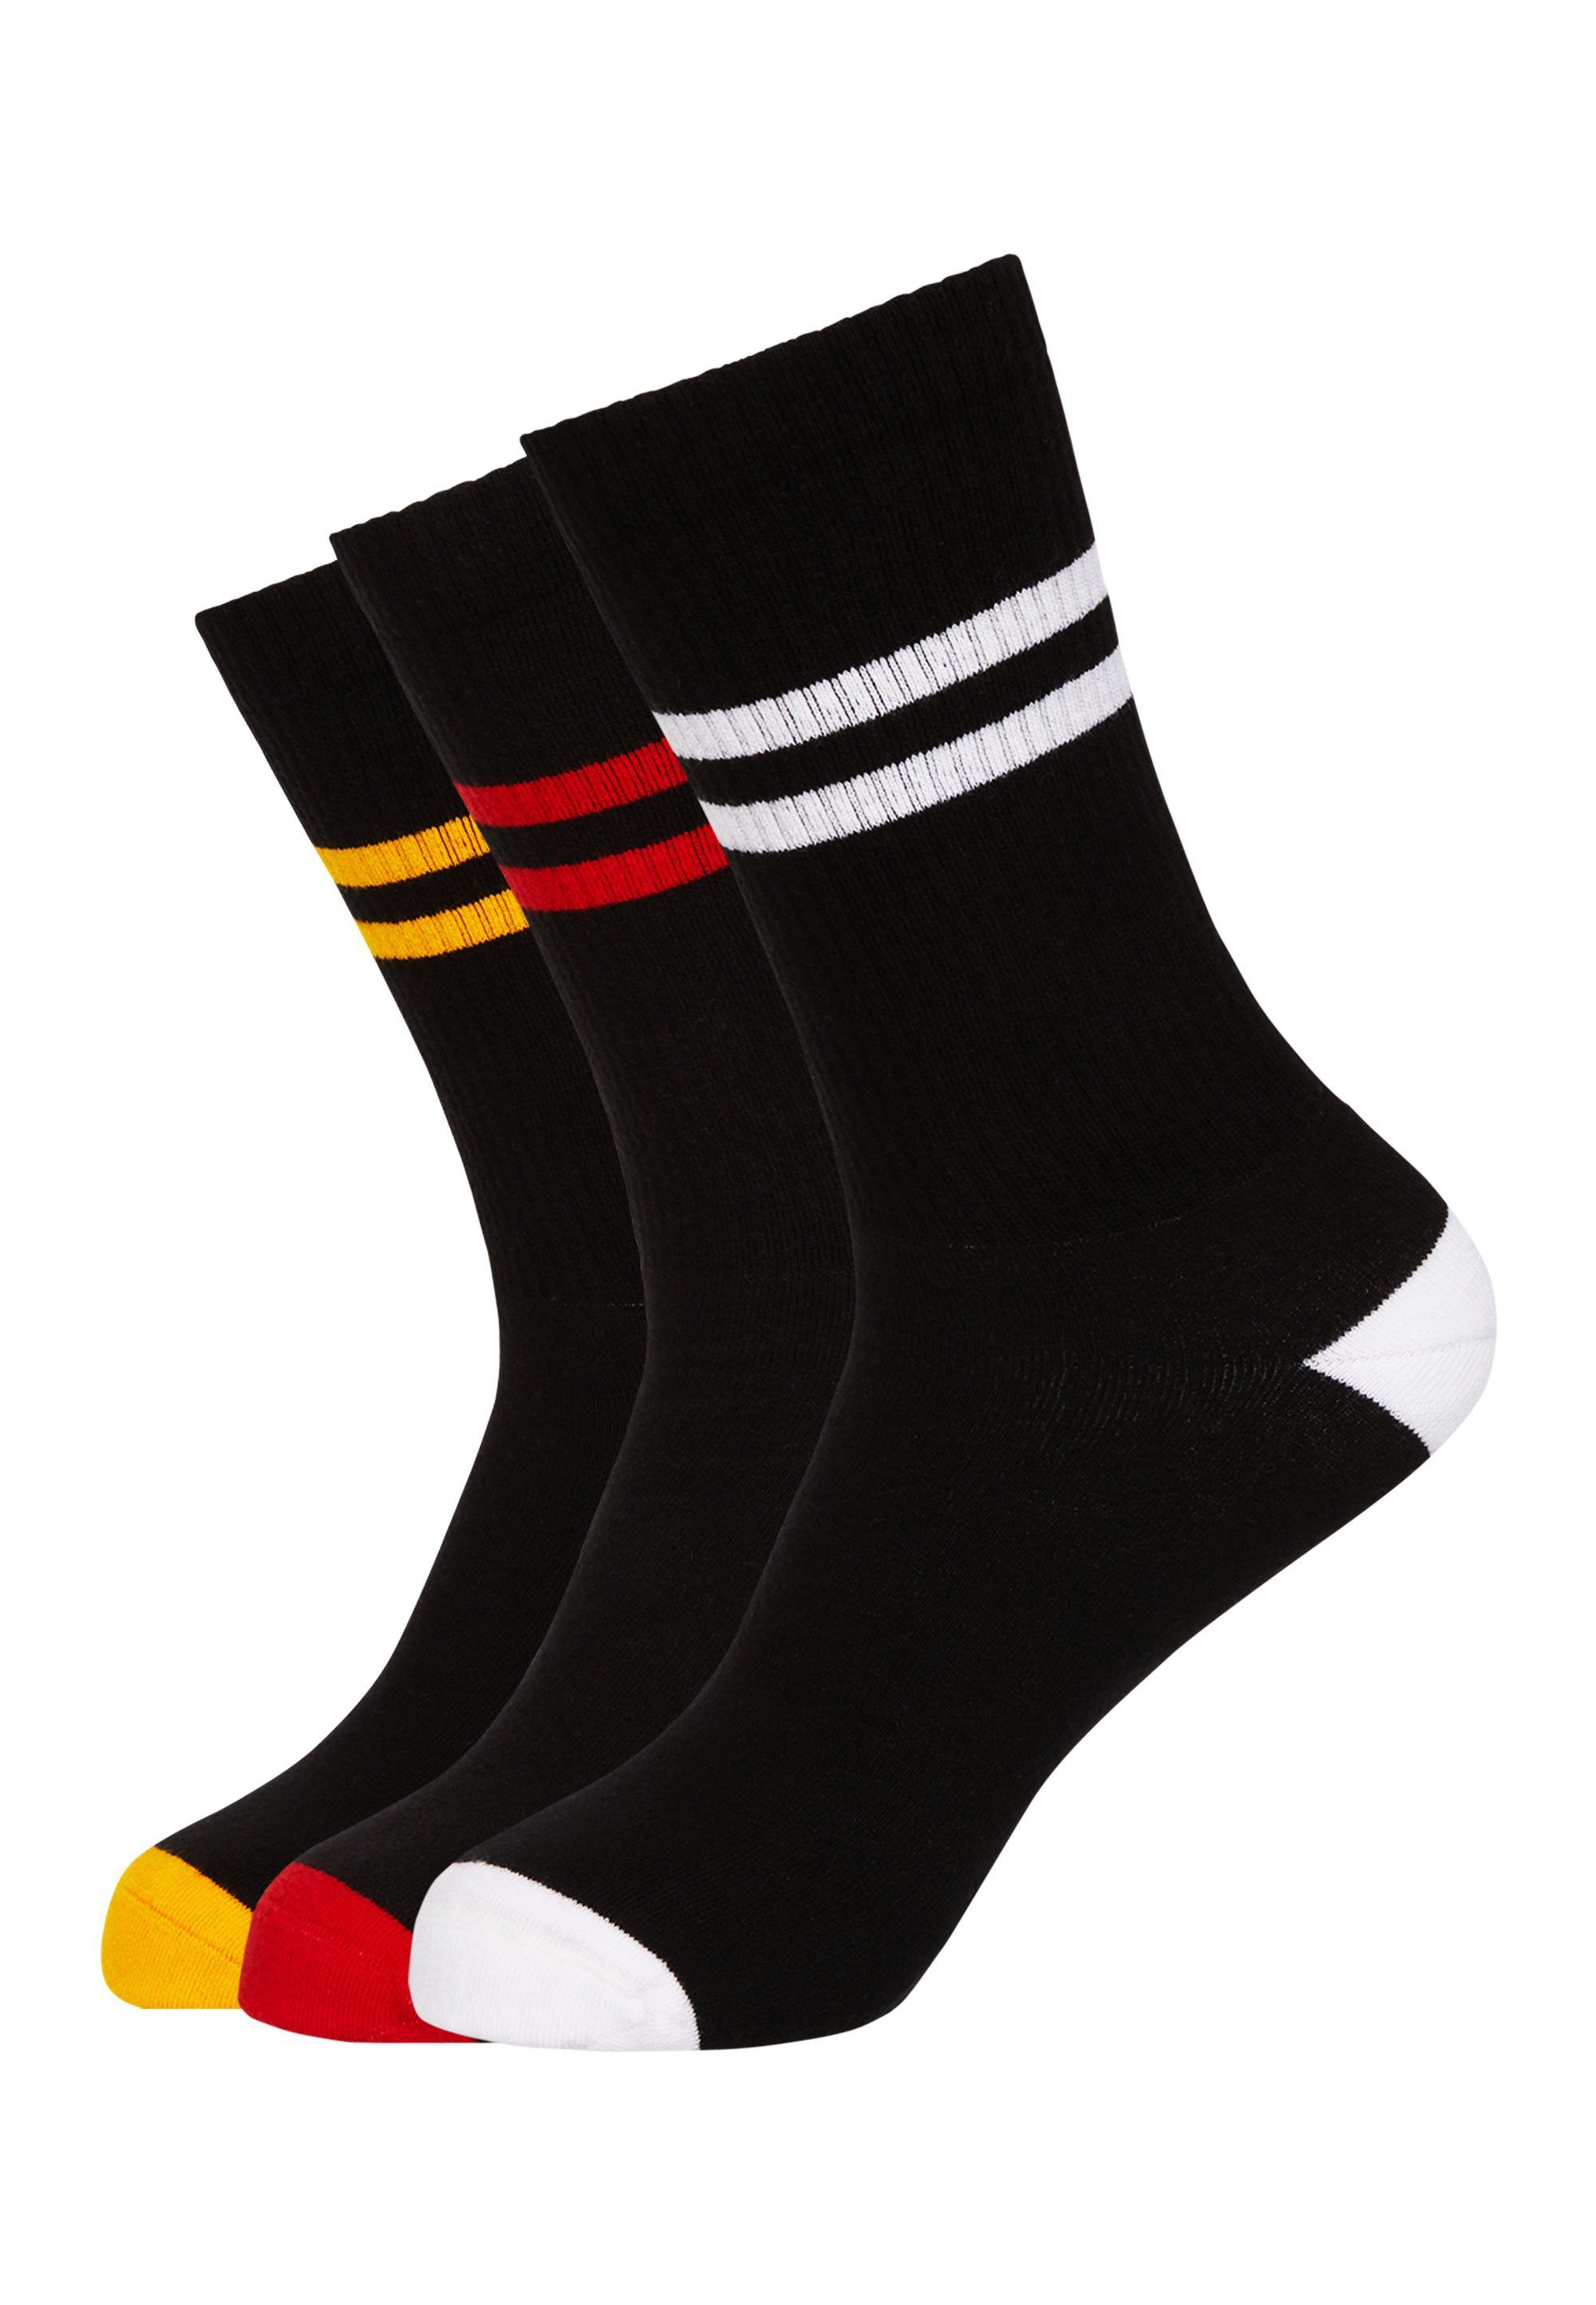 Mxthersocker Socken CLASSIC - WHATS THE RACKET (3-Paar) in kräftigen Farben schwarz